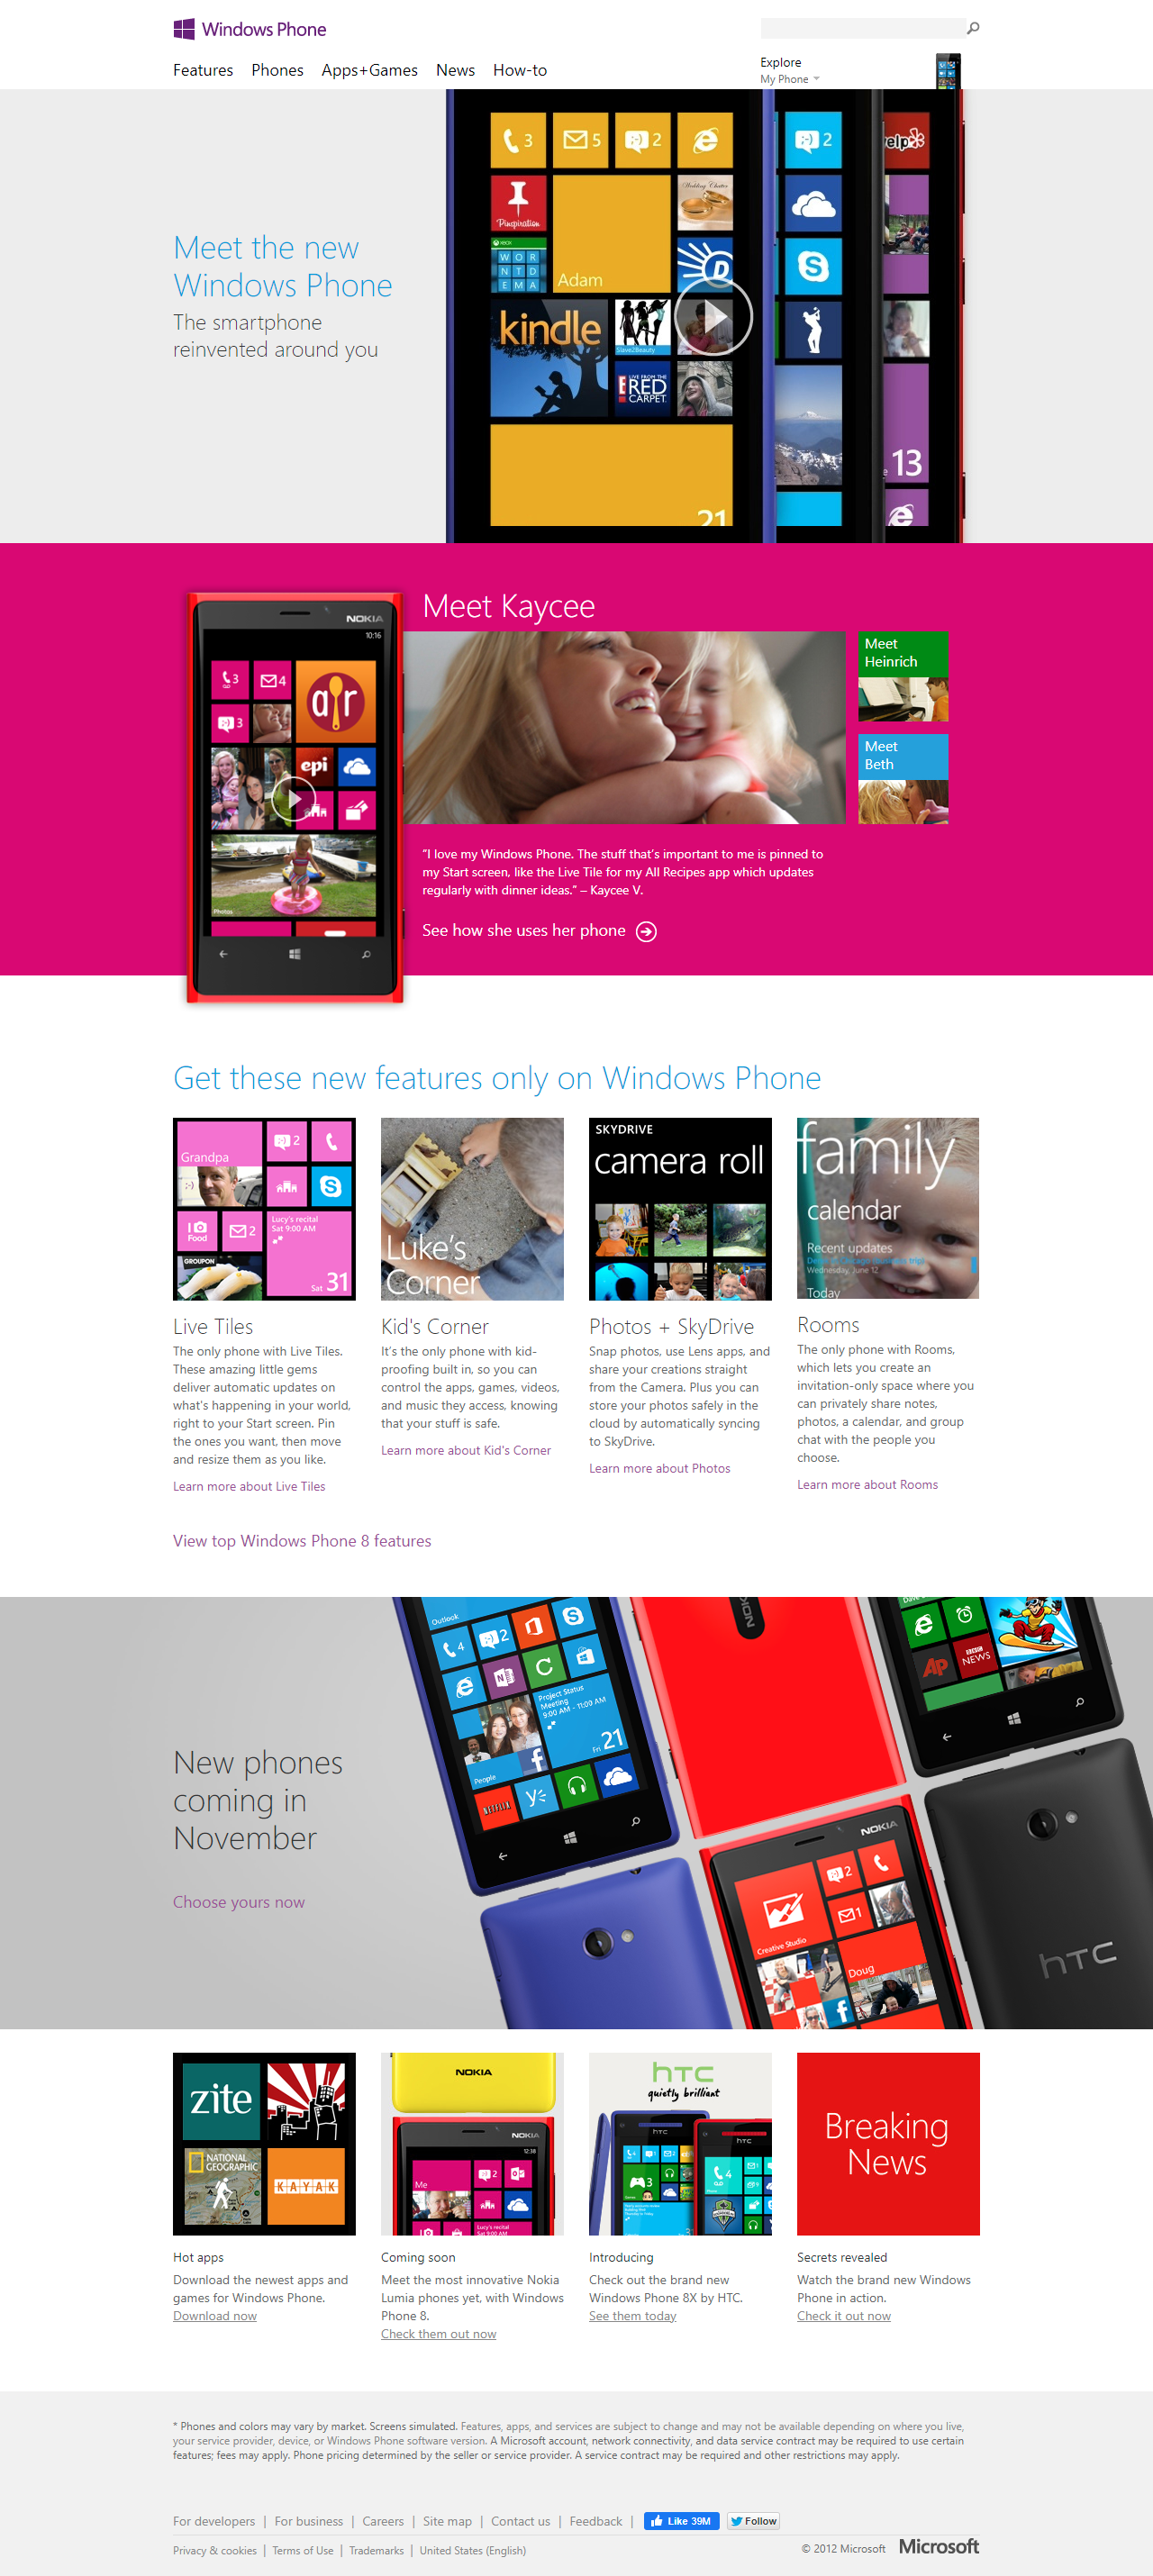 Windows Phone website in 2012